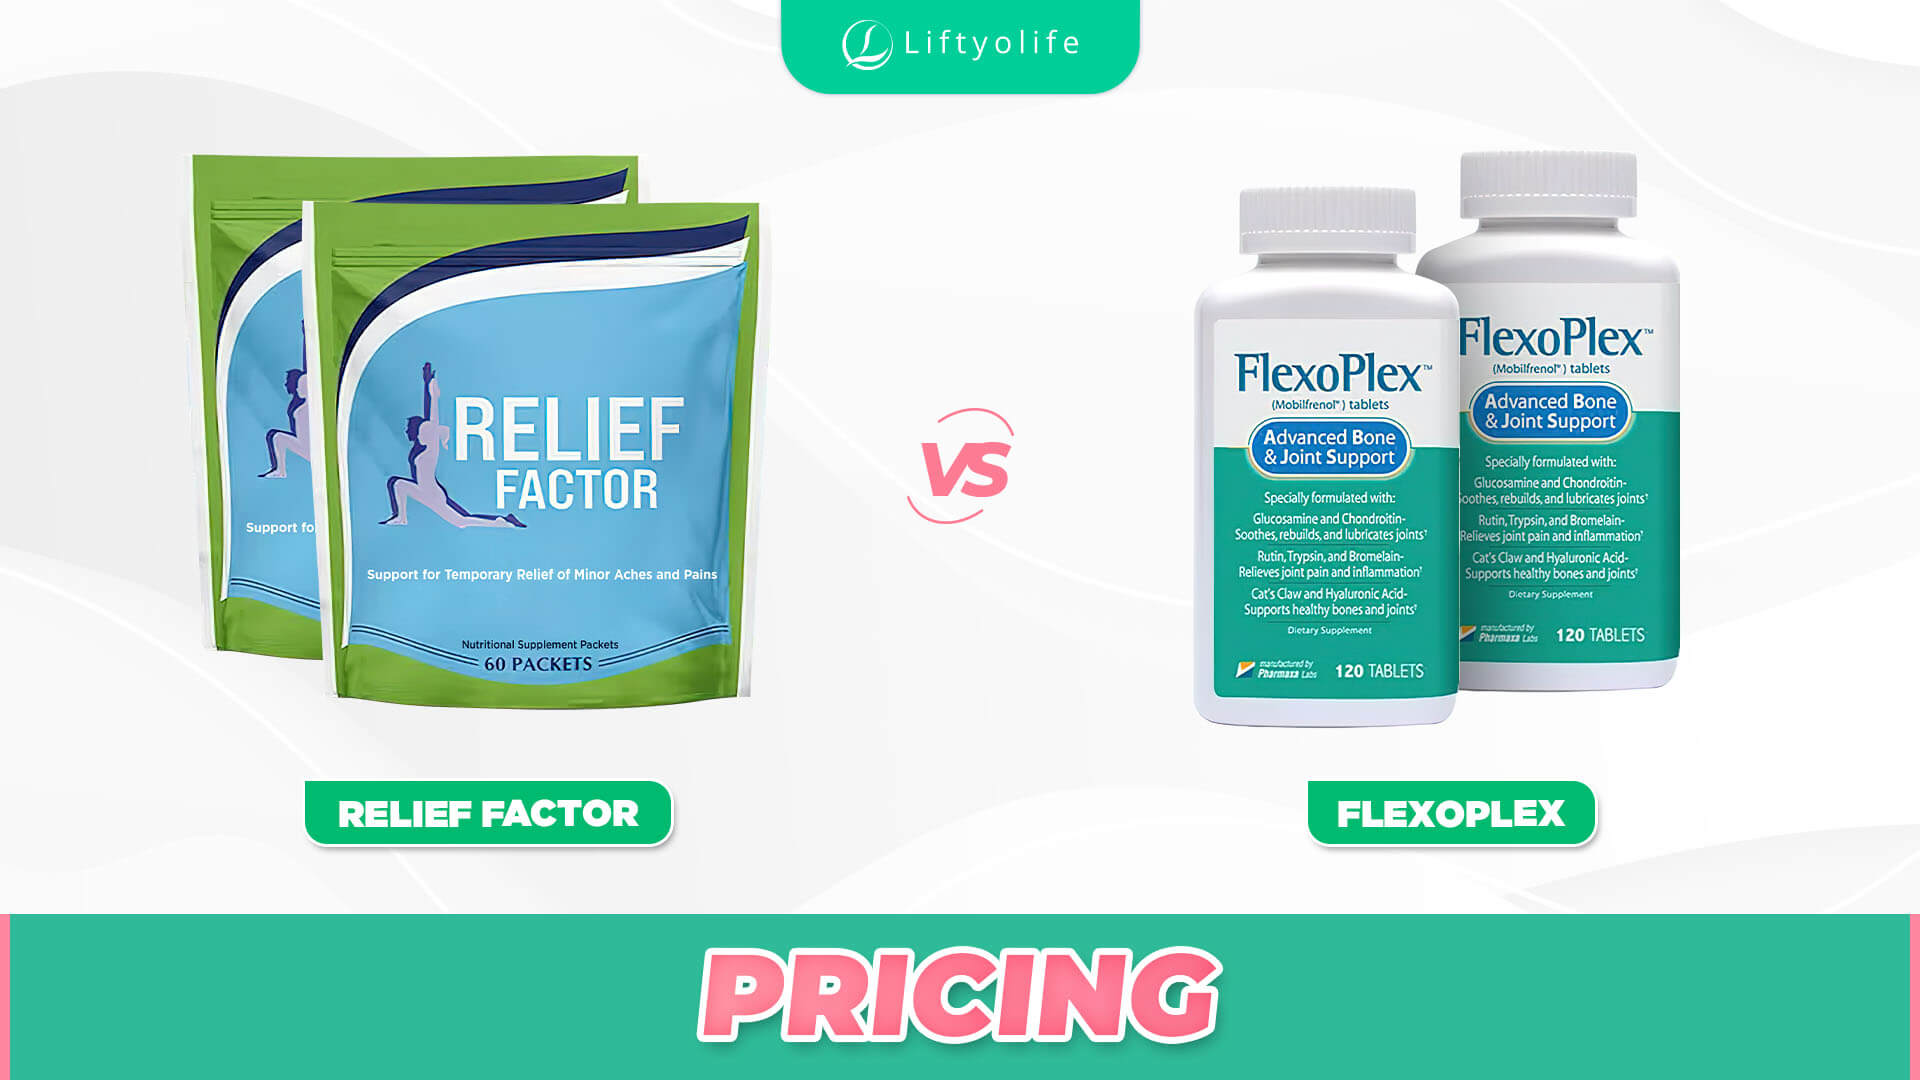 Flexoplex Vs Relief Factor: The Pricing